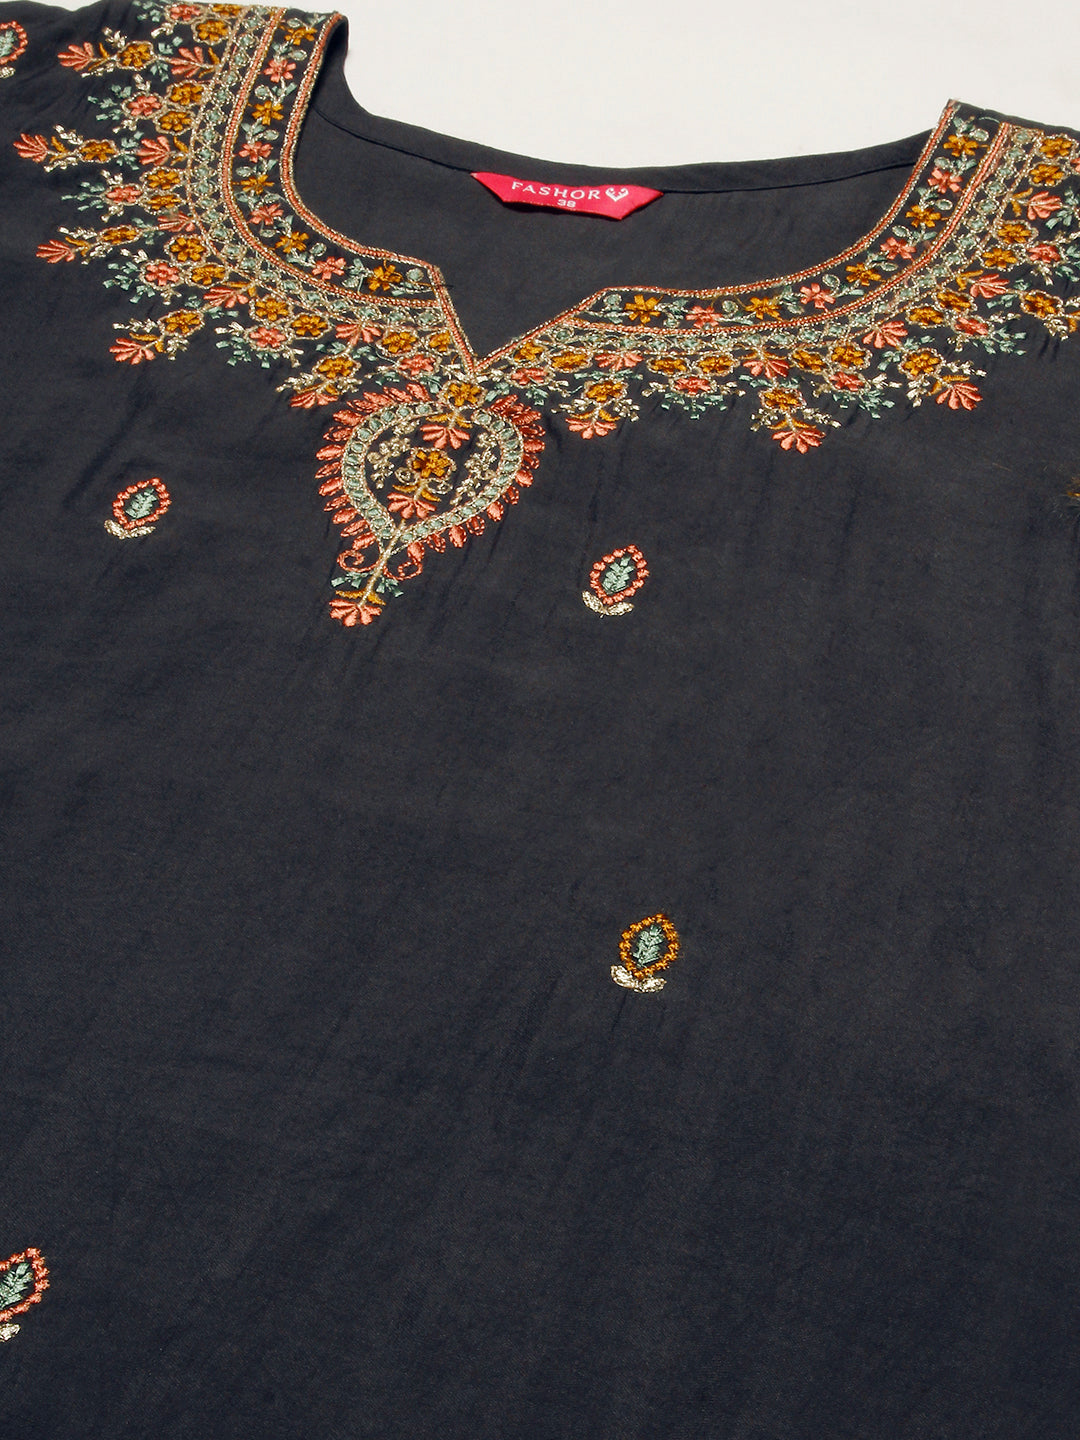 Solid Resham & Zari Embroidered Kurta With Pants & Floral Brasso Dupatta - Black